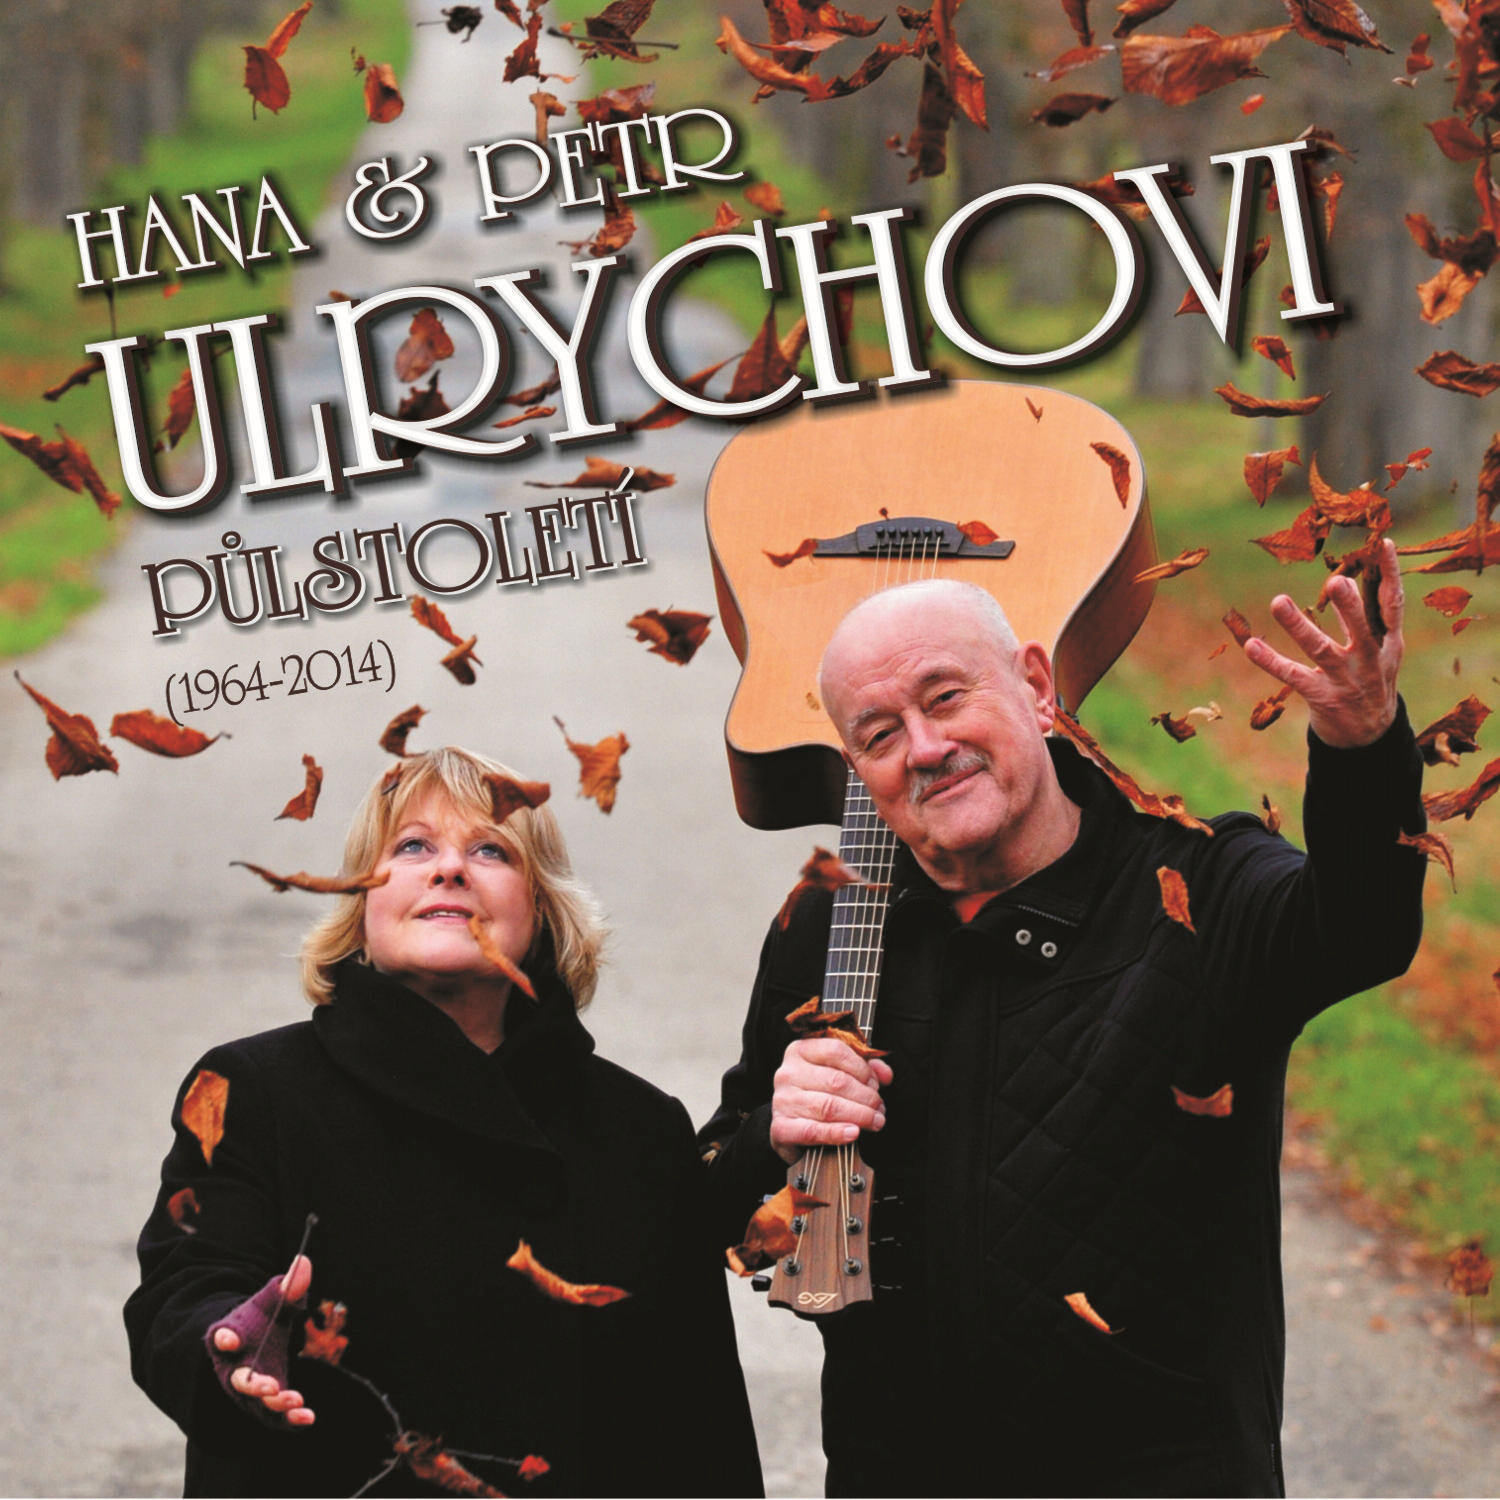 CD Shop - ULRYCHOVI PETR A HANA PULSTOLETI (1964–2014)